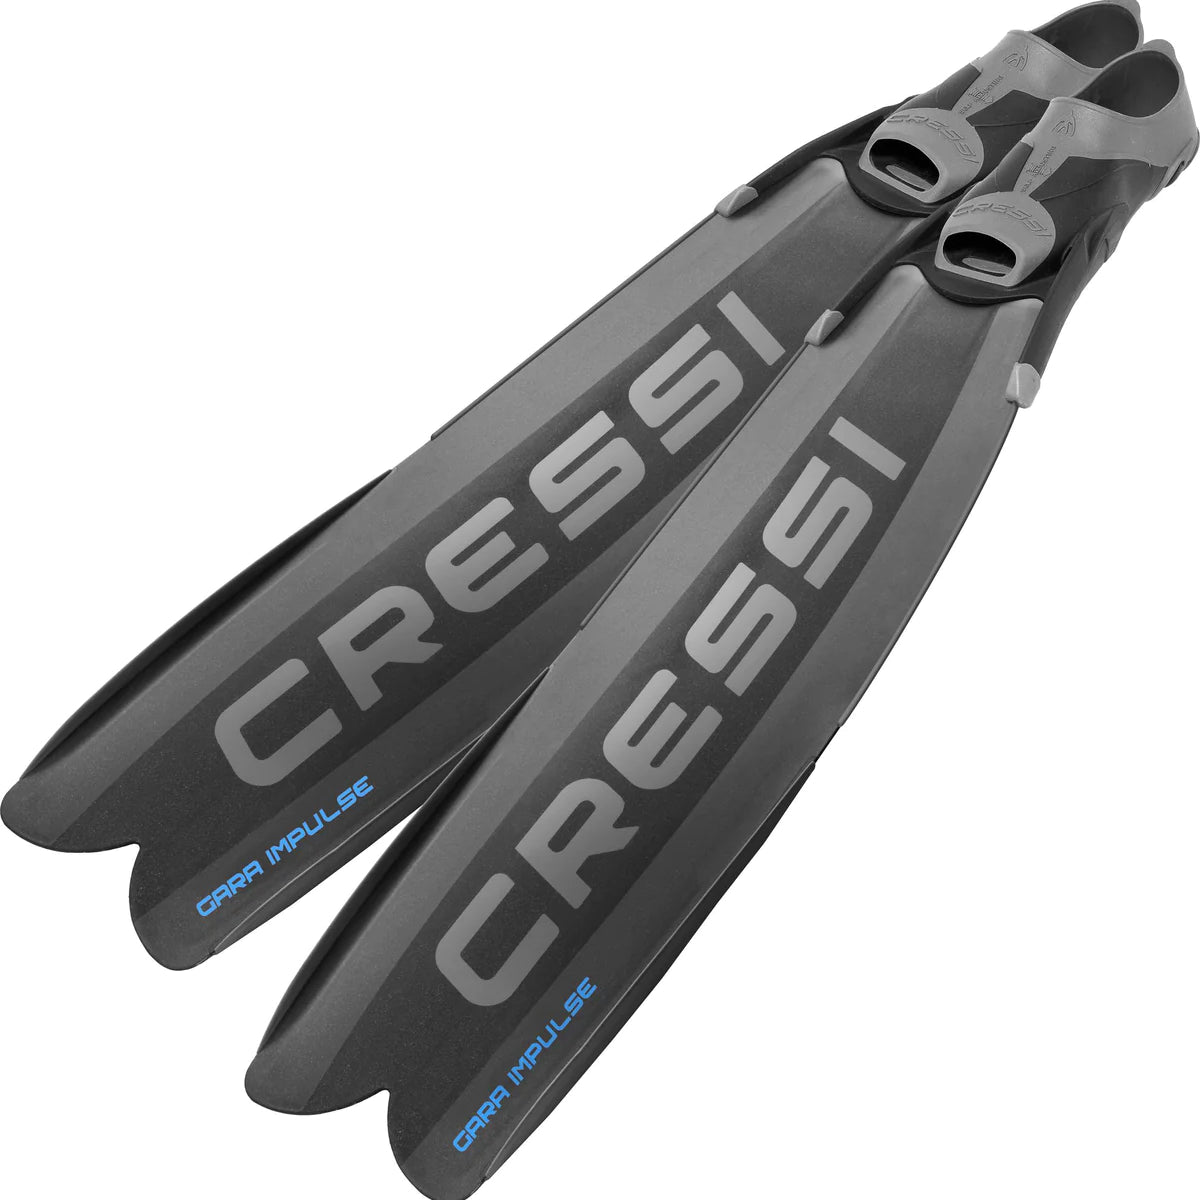 Cressi Gara Modular Impulse TURBO Long Blade Fins